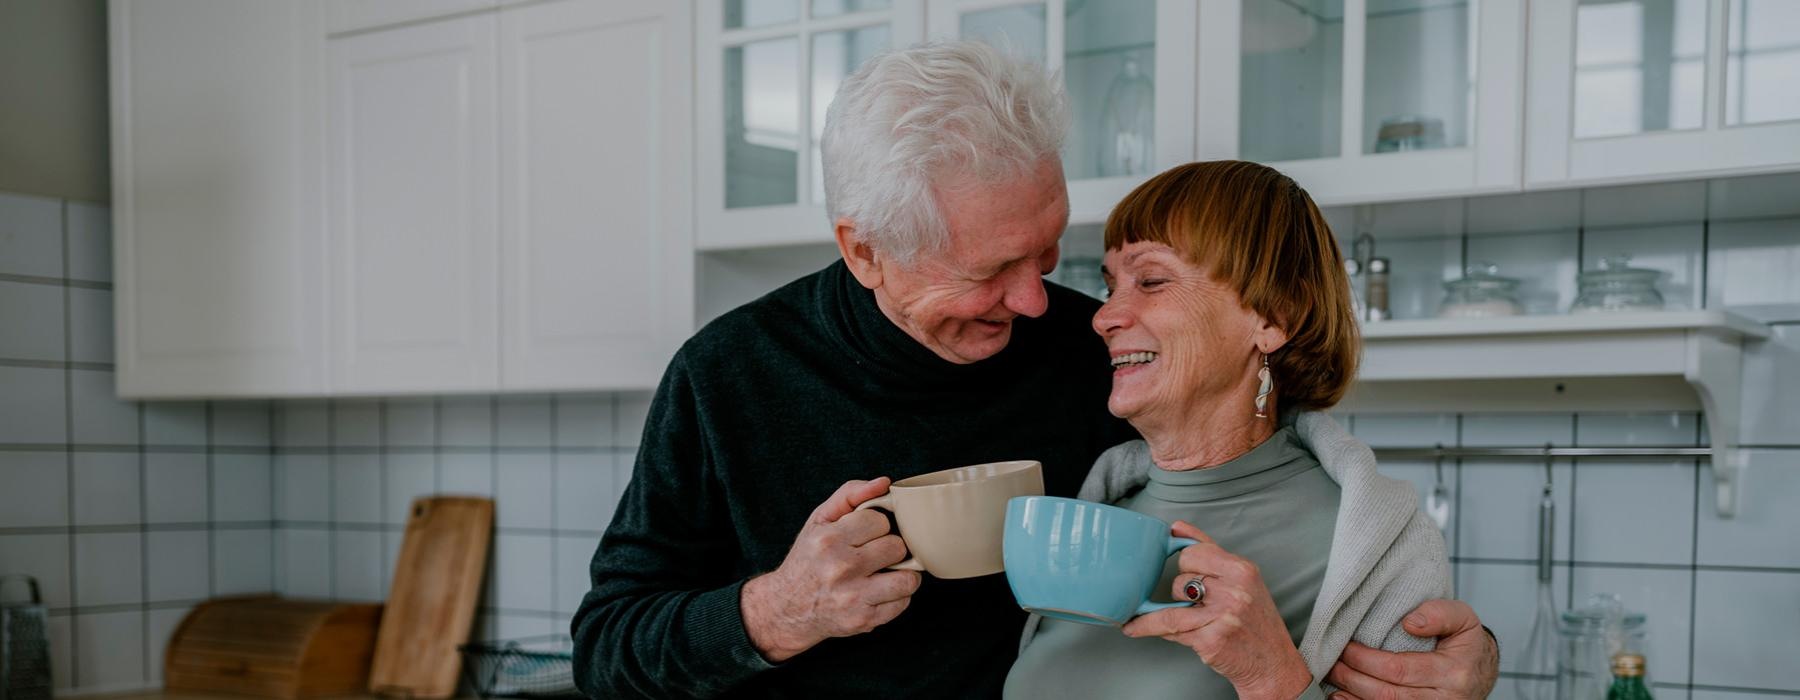 a man and a woman holding a mug